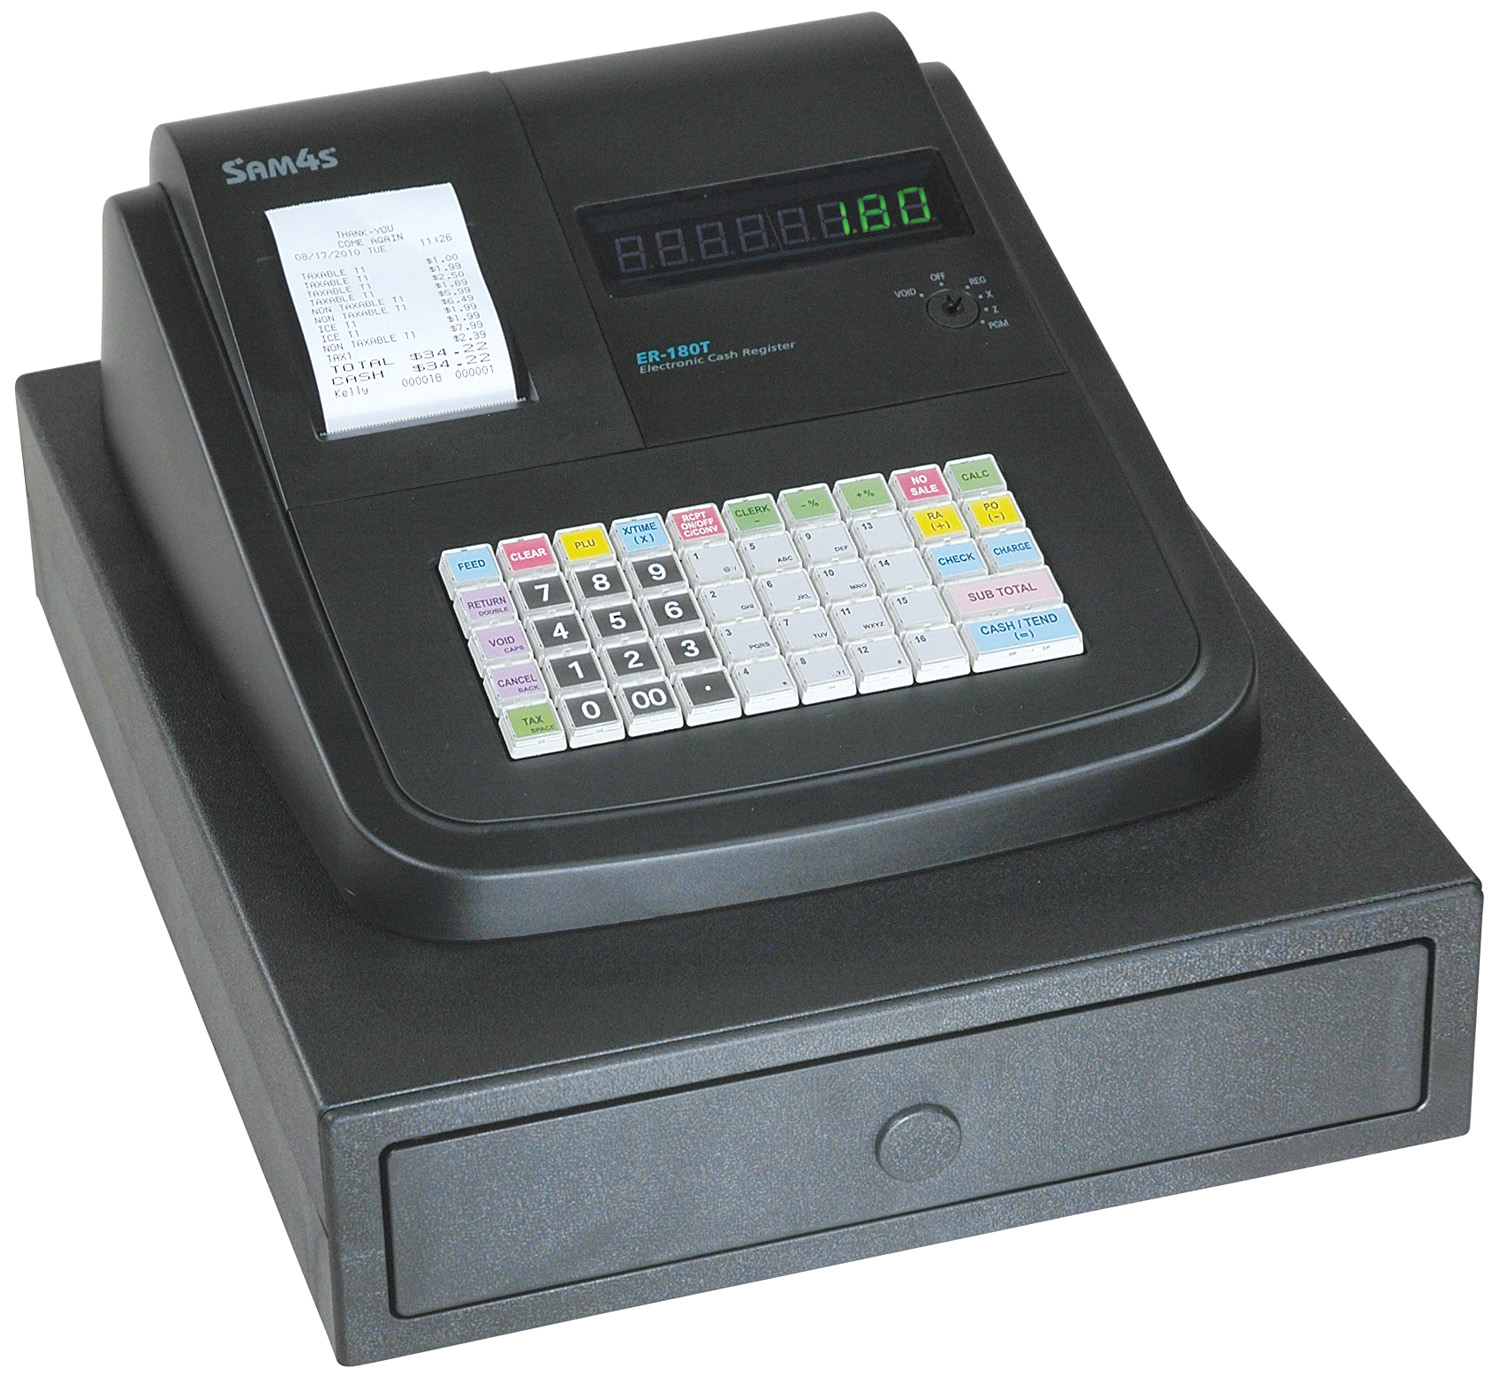 sam4s cash register operator manuals 